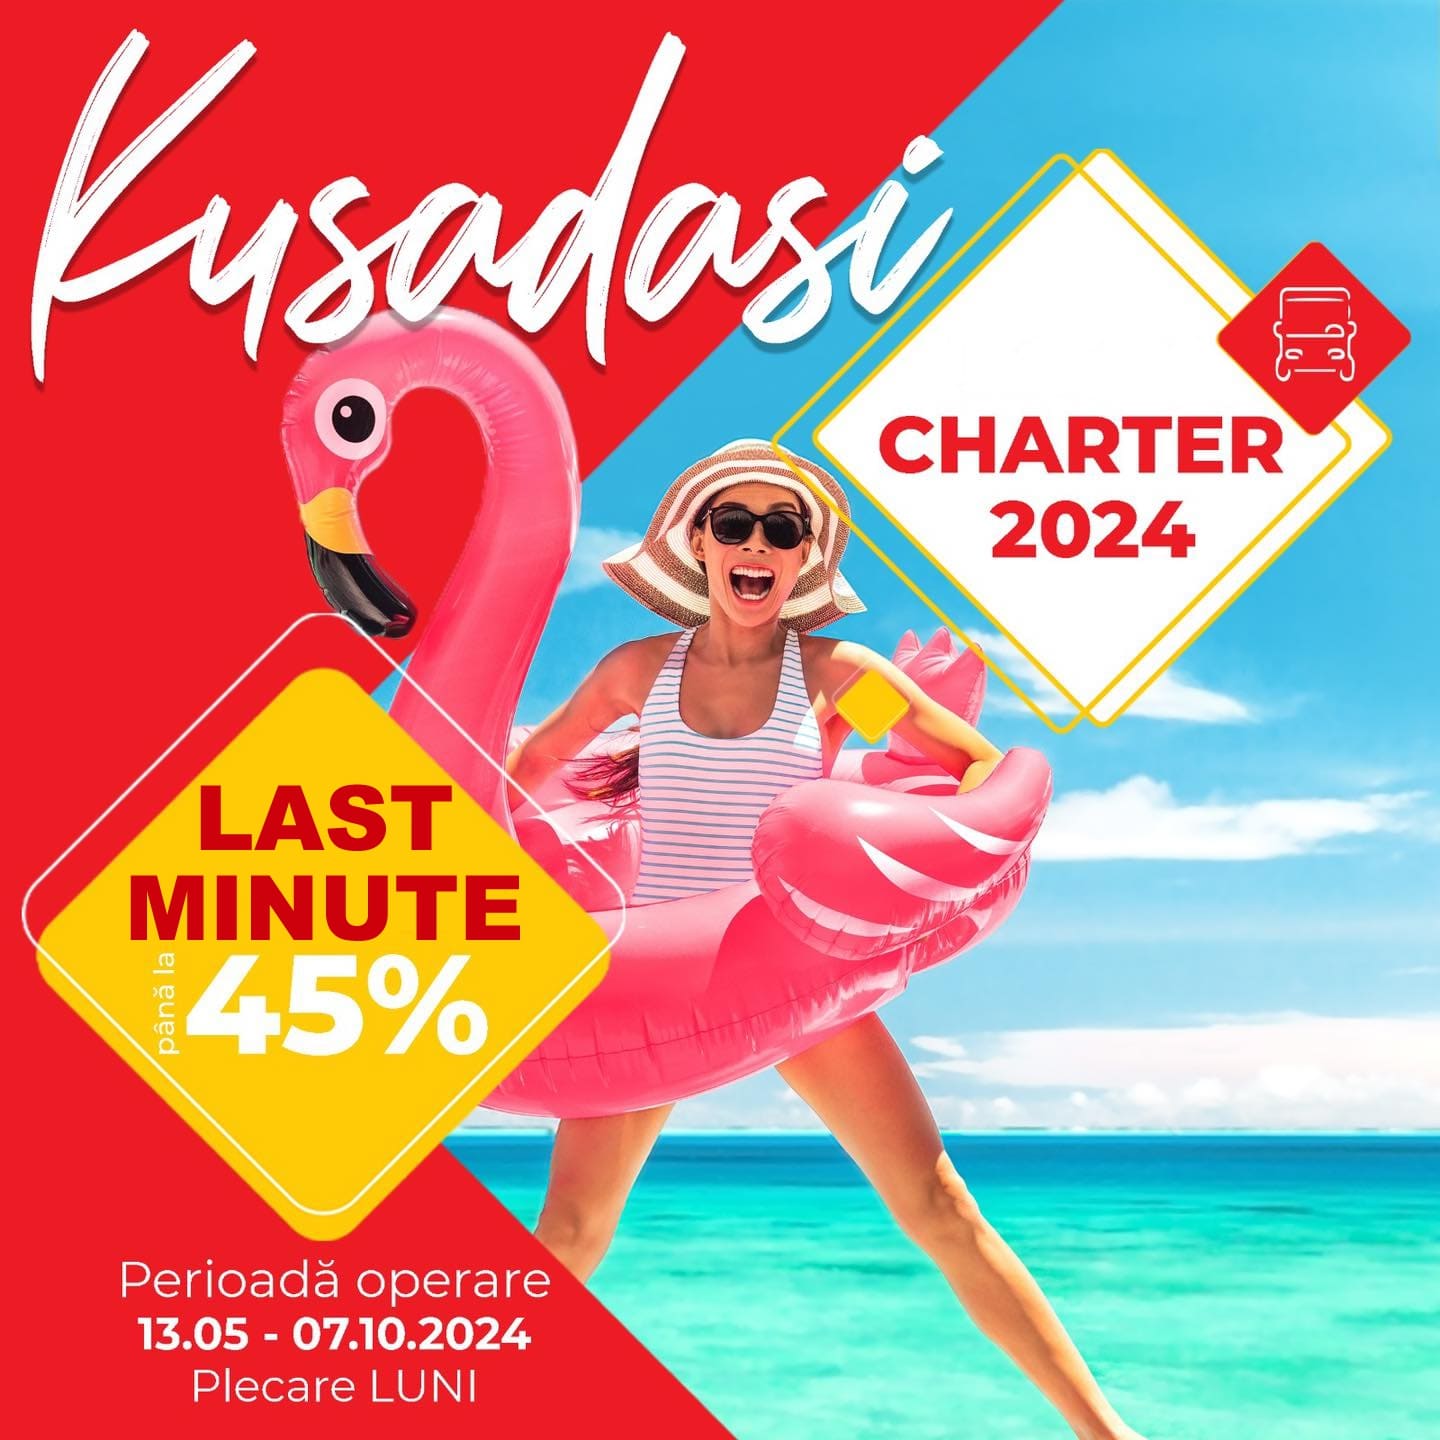 Oferte early booking vara 2024 Kusadasi - Turcia - pana la 30% reducere - charter autocar / avion - tarife - rezervari online - reduceri - hoteluri